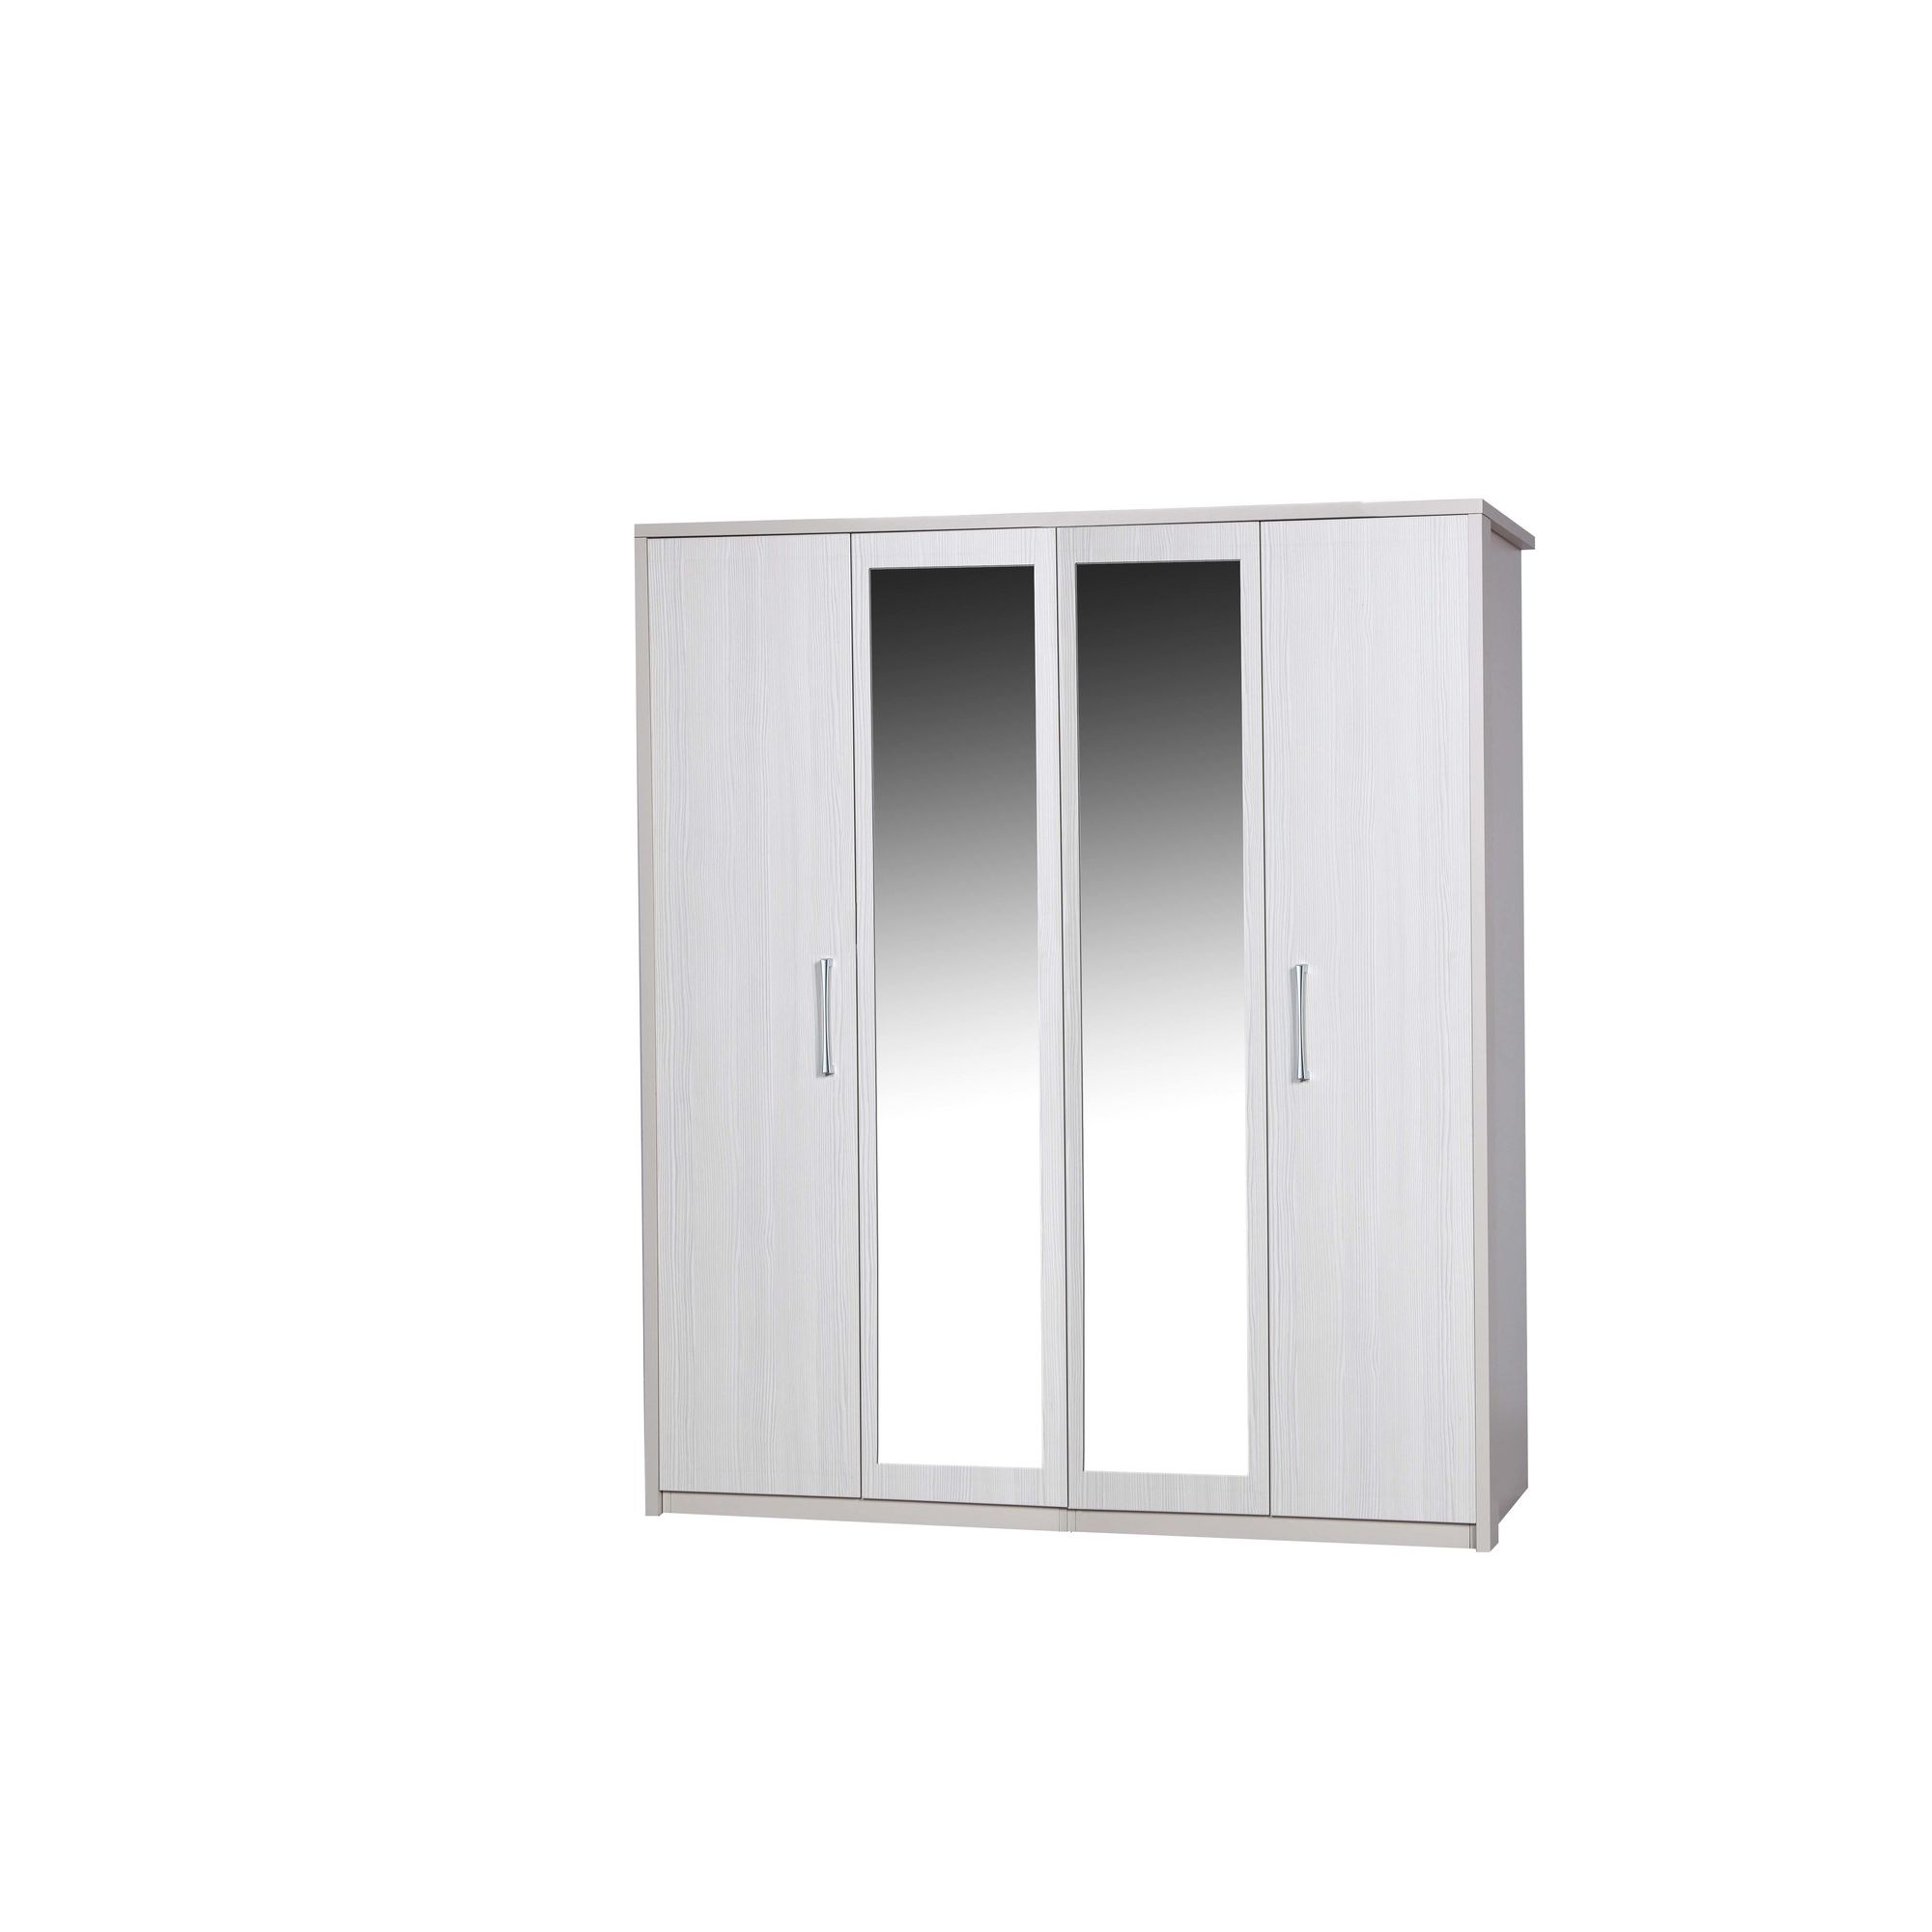 Alto Furniture Avola 4 Door Wardrobe with Mirror - Cream Carcass With White Avola at Tesco Direct